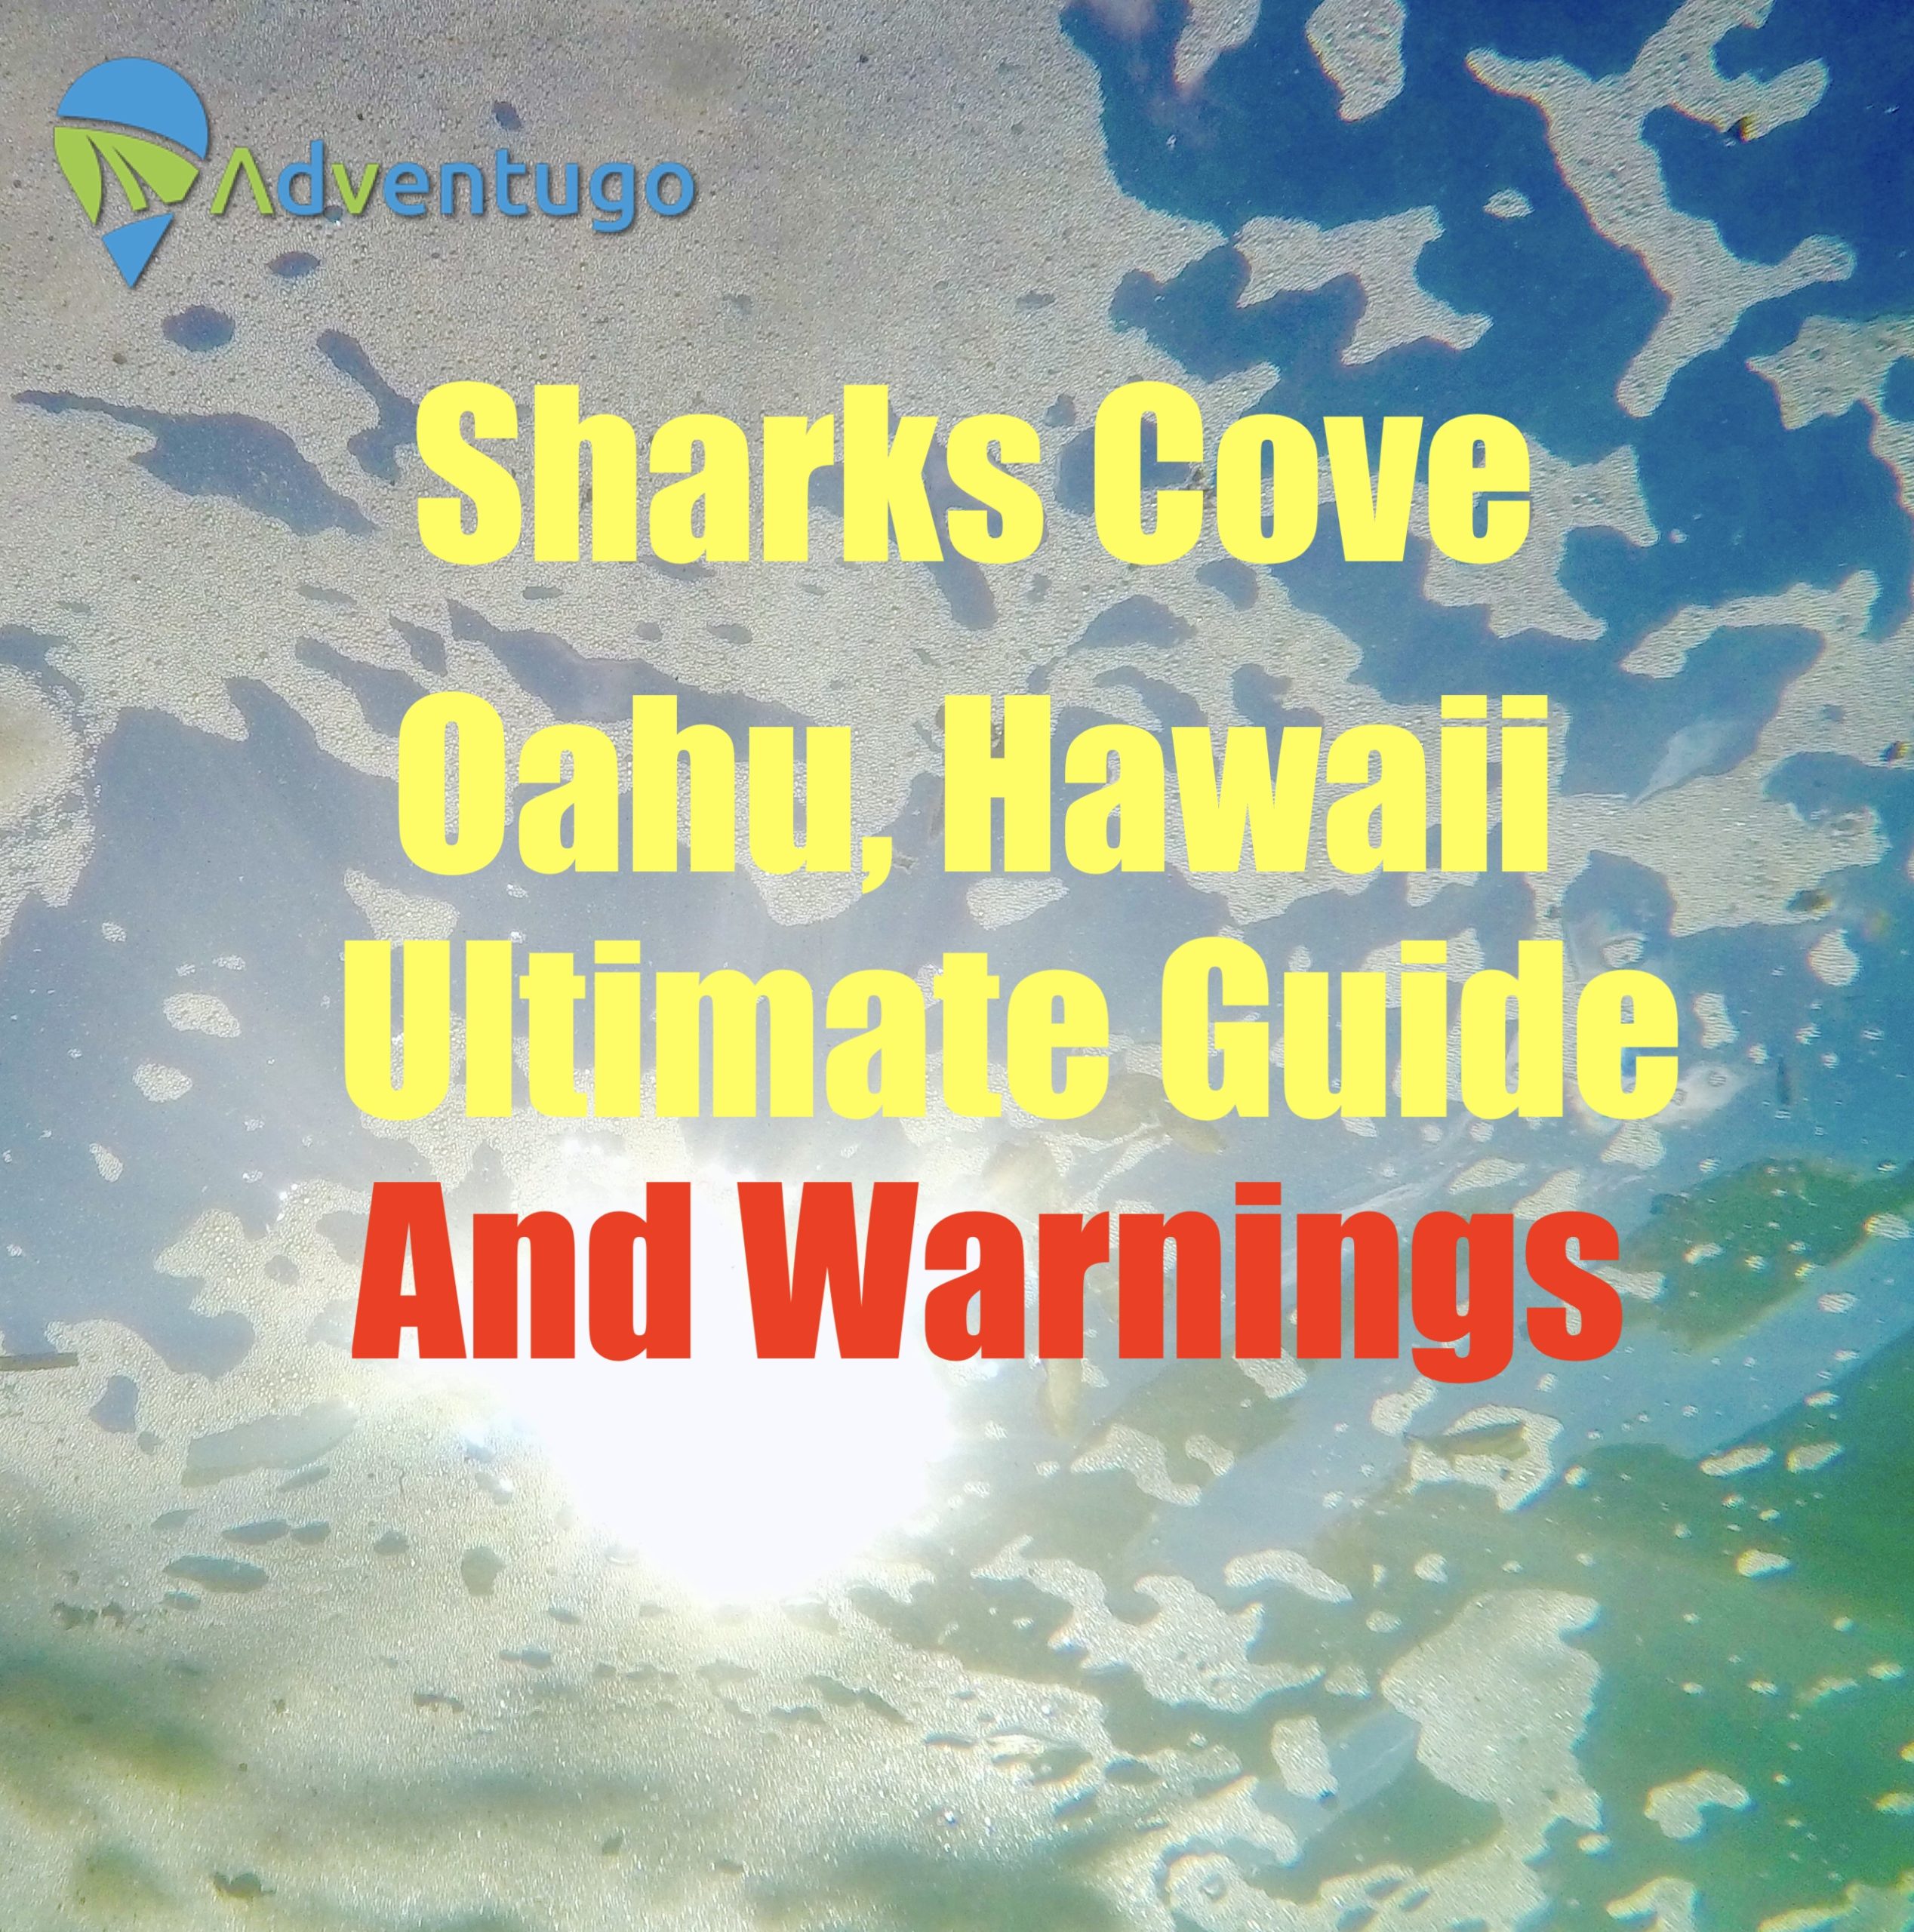 Sharks Cove Oahu, Hawaii Guide and Warnings